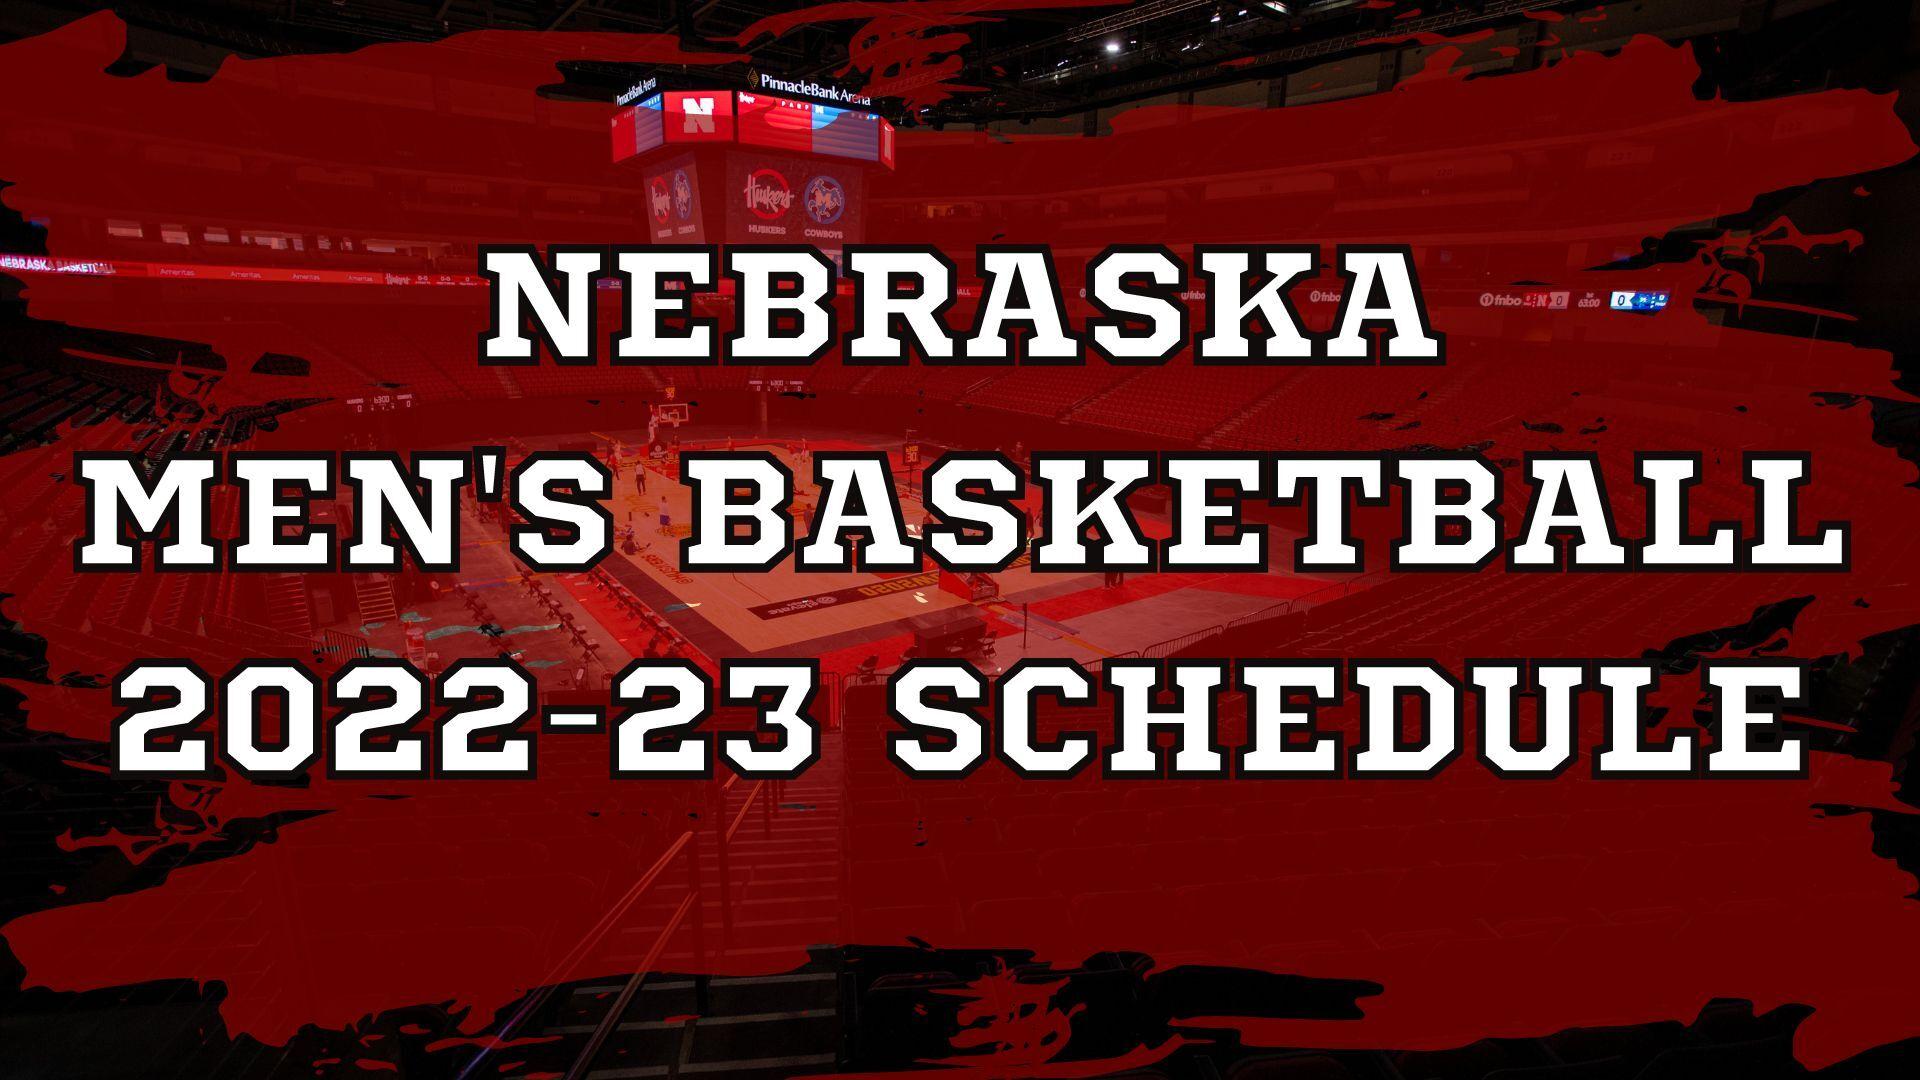 Hoiberg believes this is season Nebraska will show progress